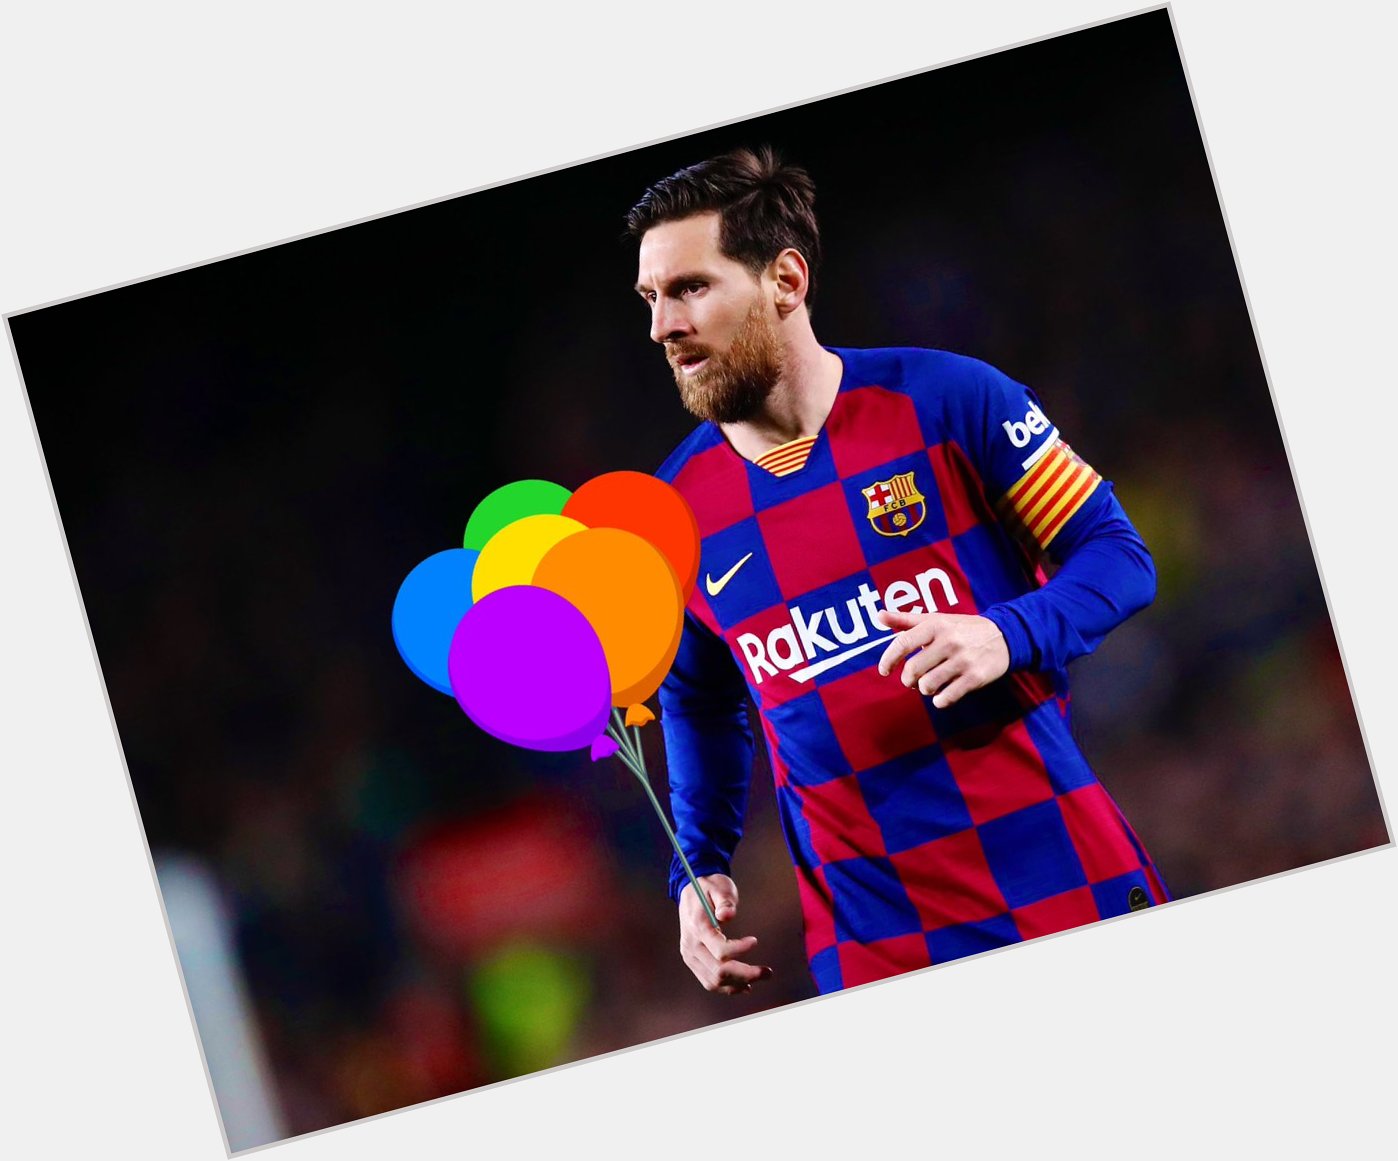 6  9  9  career goals
2  5  0  Barcelona assists

Happy 33rd Birthday Lionel Messi! 